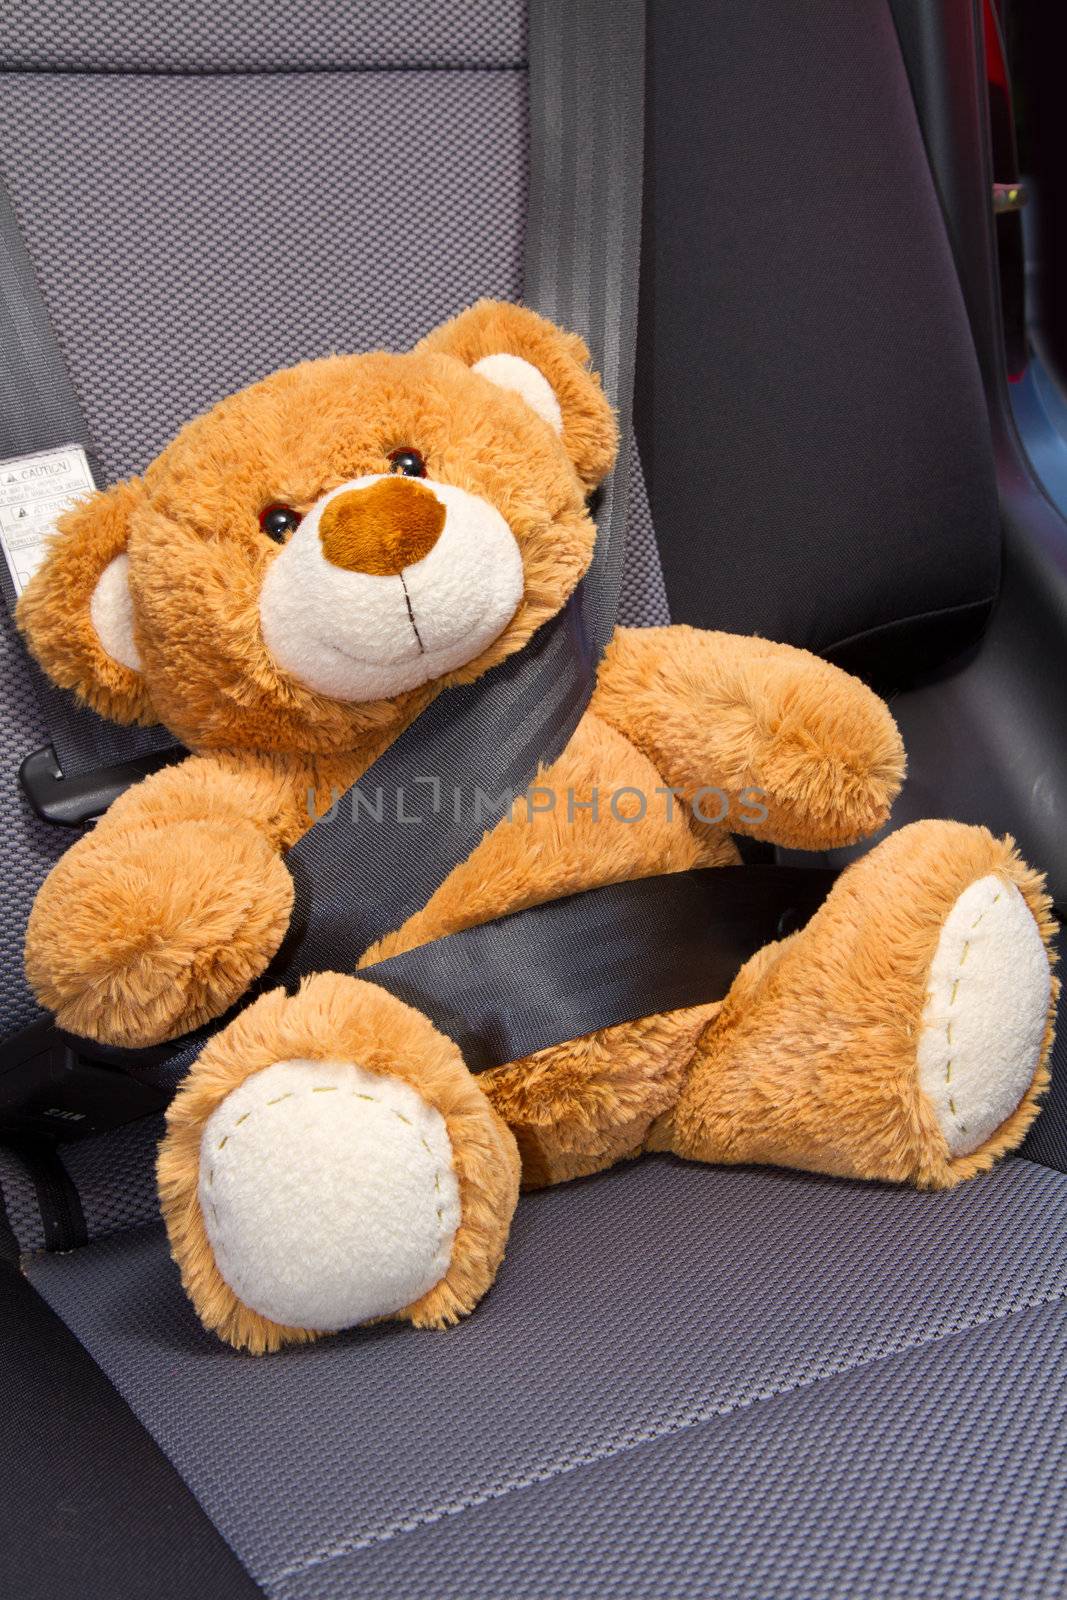 Teddy Bear buckled with safety belt in a car 